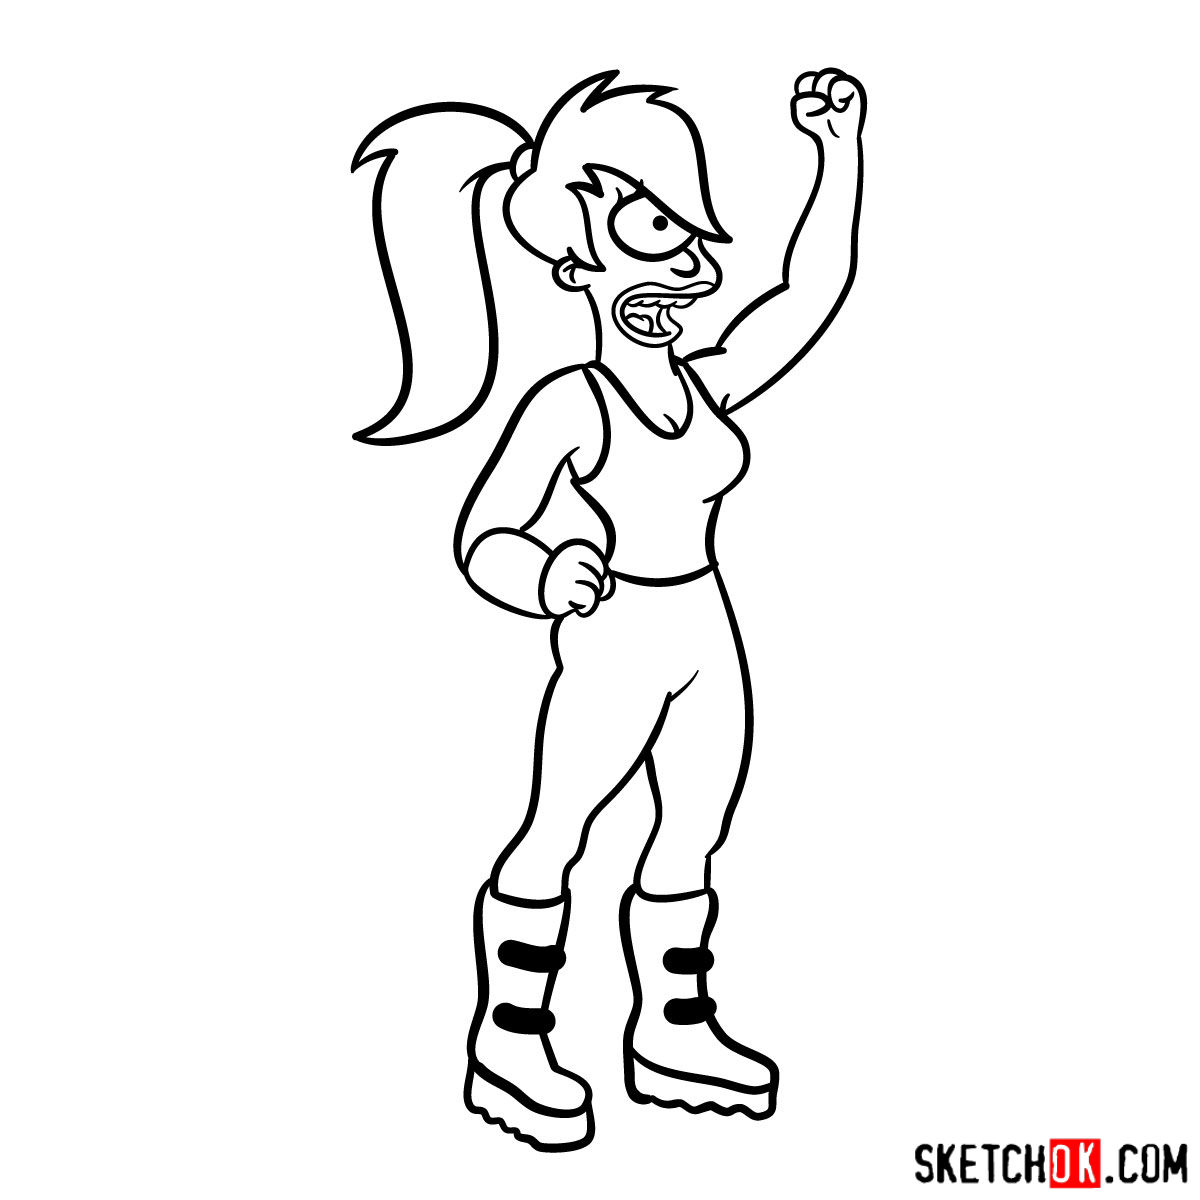 How to draw Leela from Futurama - step 12